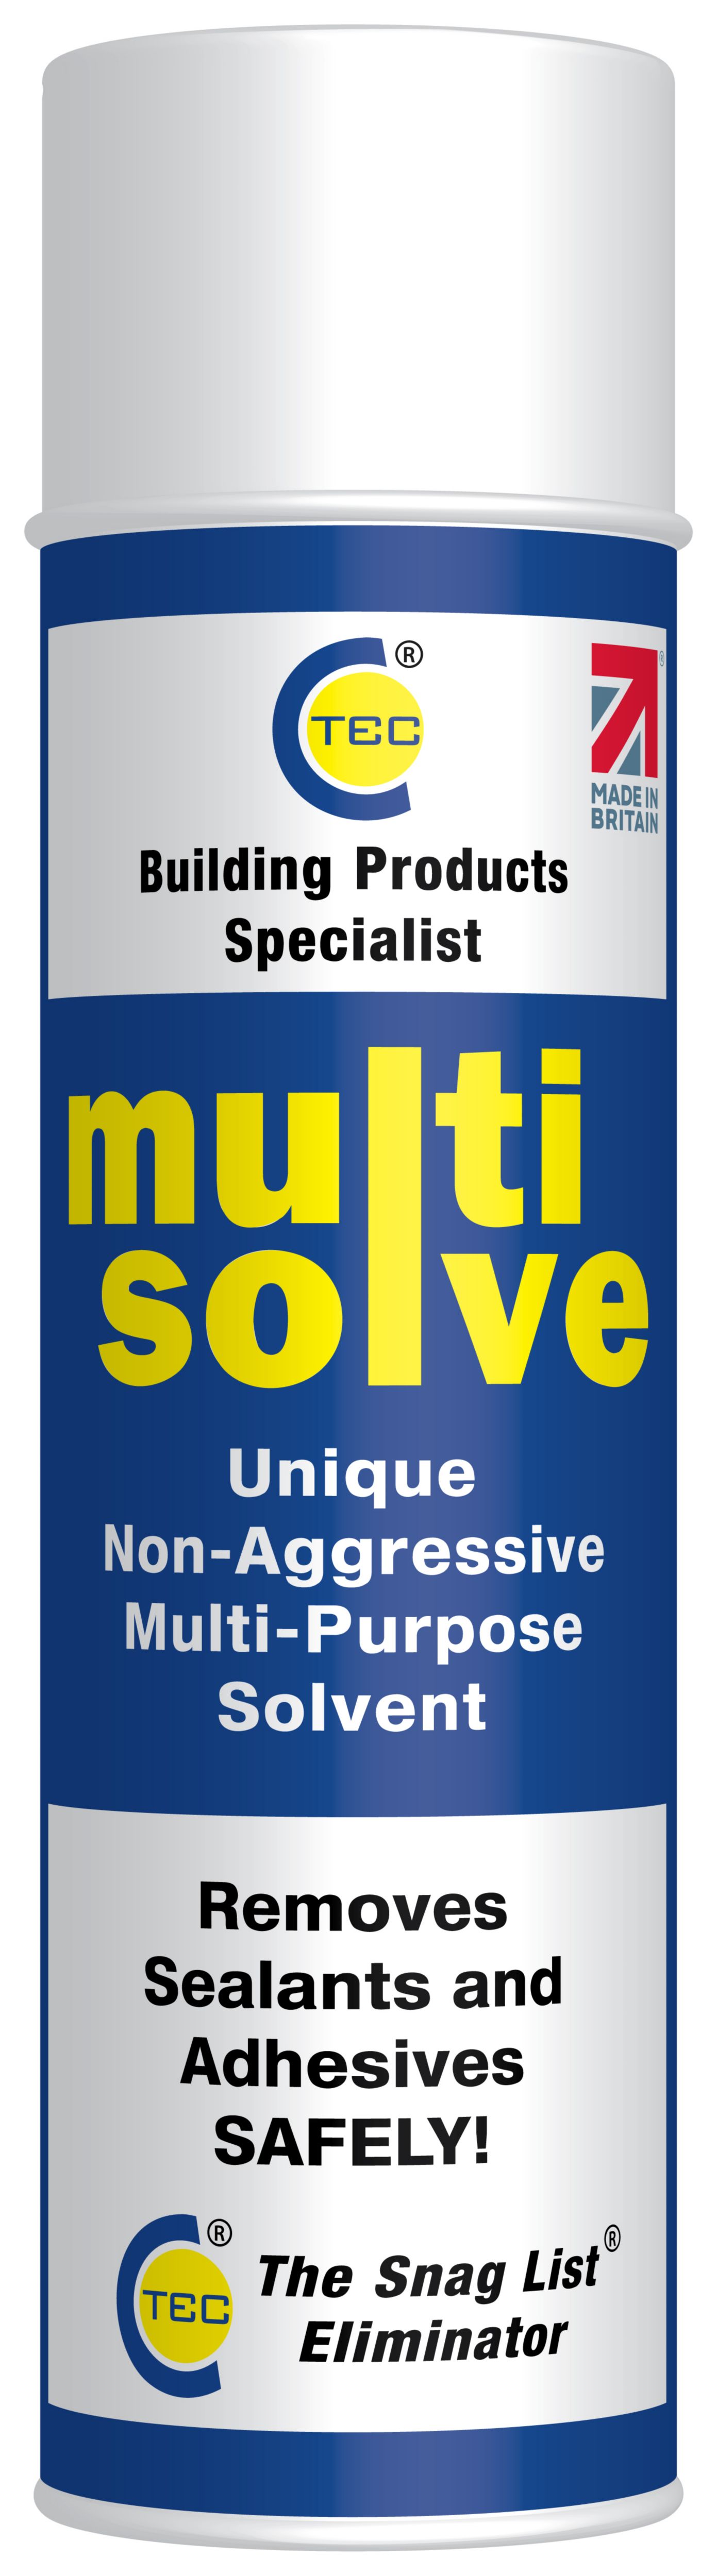 C-Tec Multisolve Non-Aggressive Multi-Purpose Solvent - 500ml